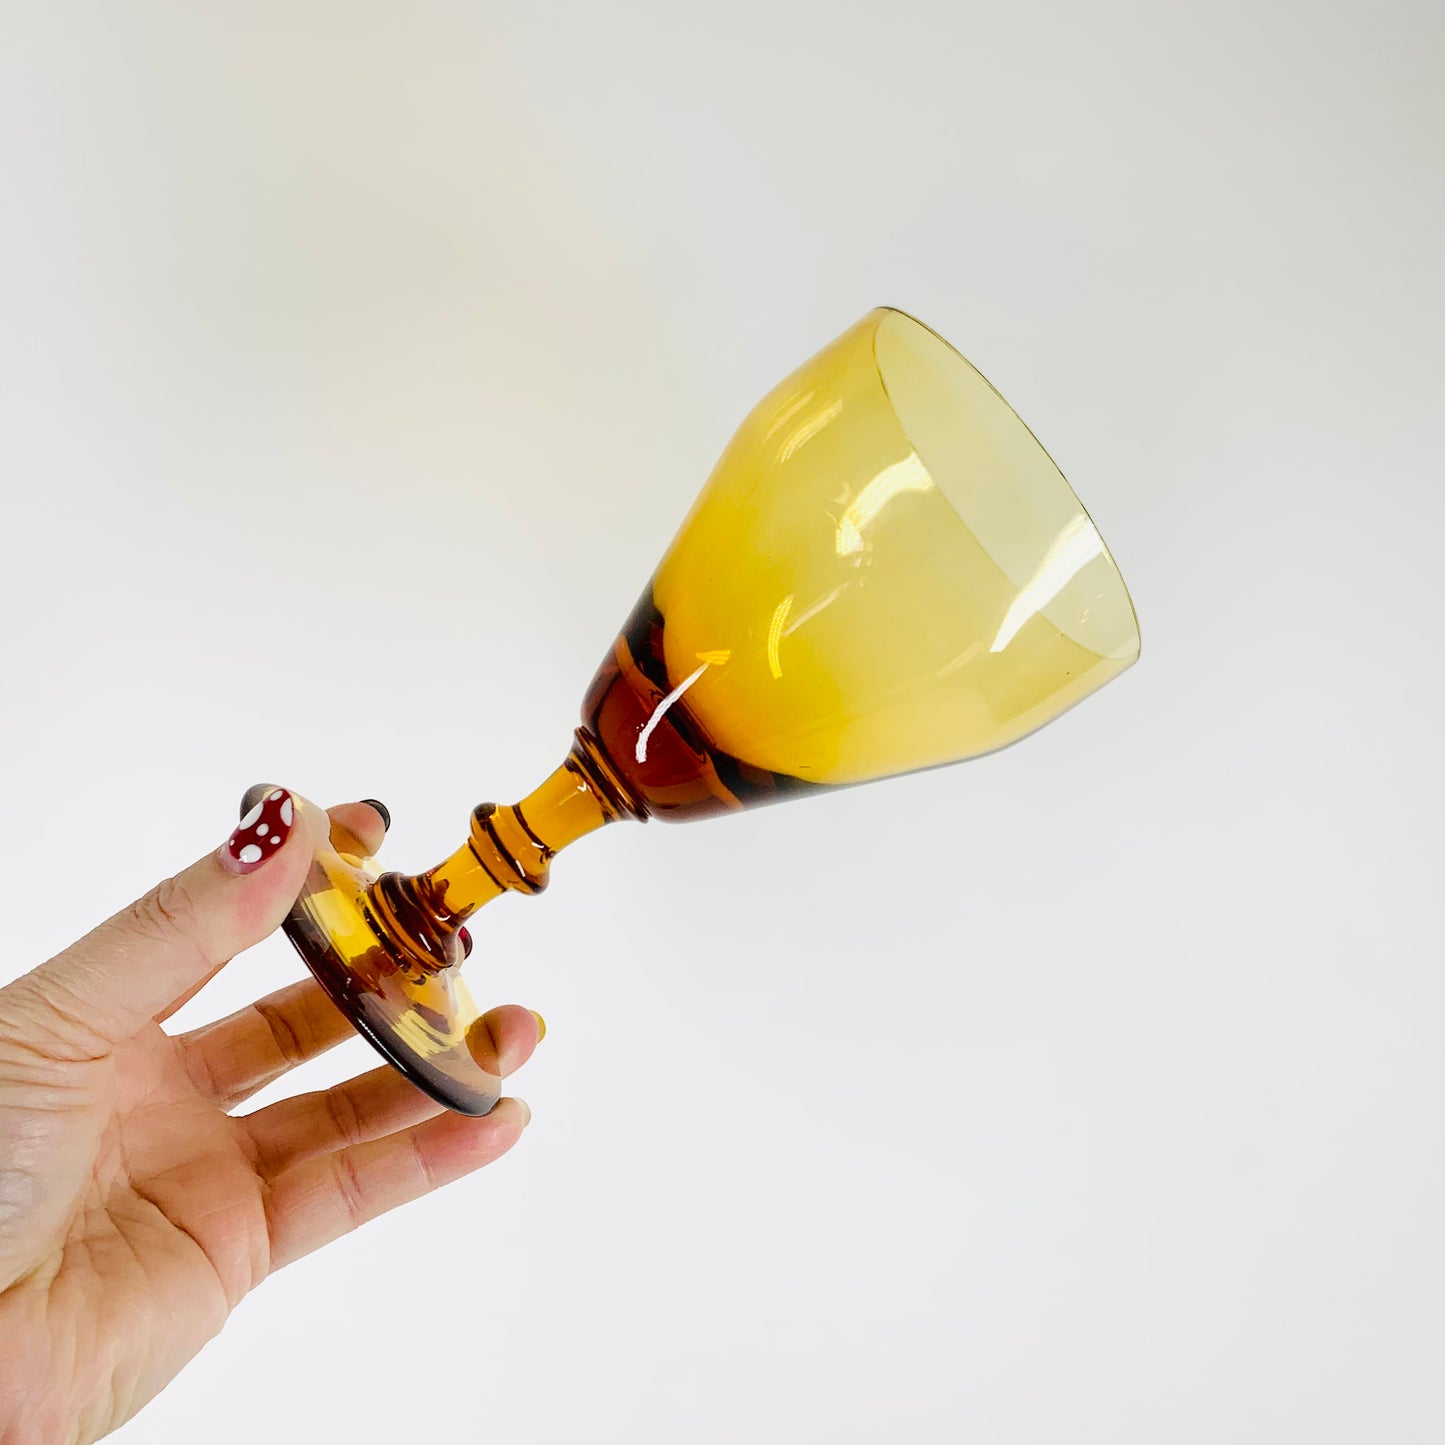 Rare Midcentury amber short stem wine glasses